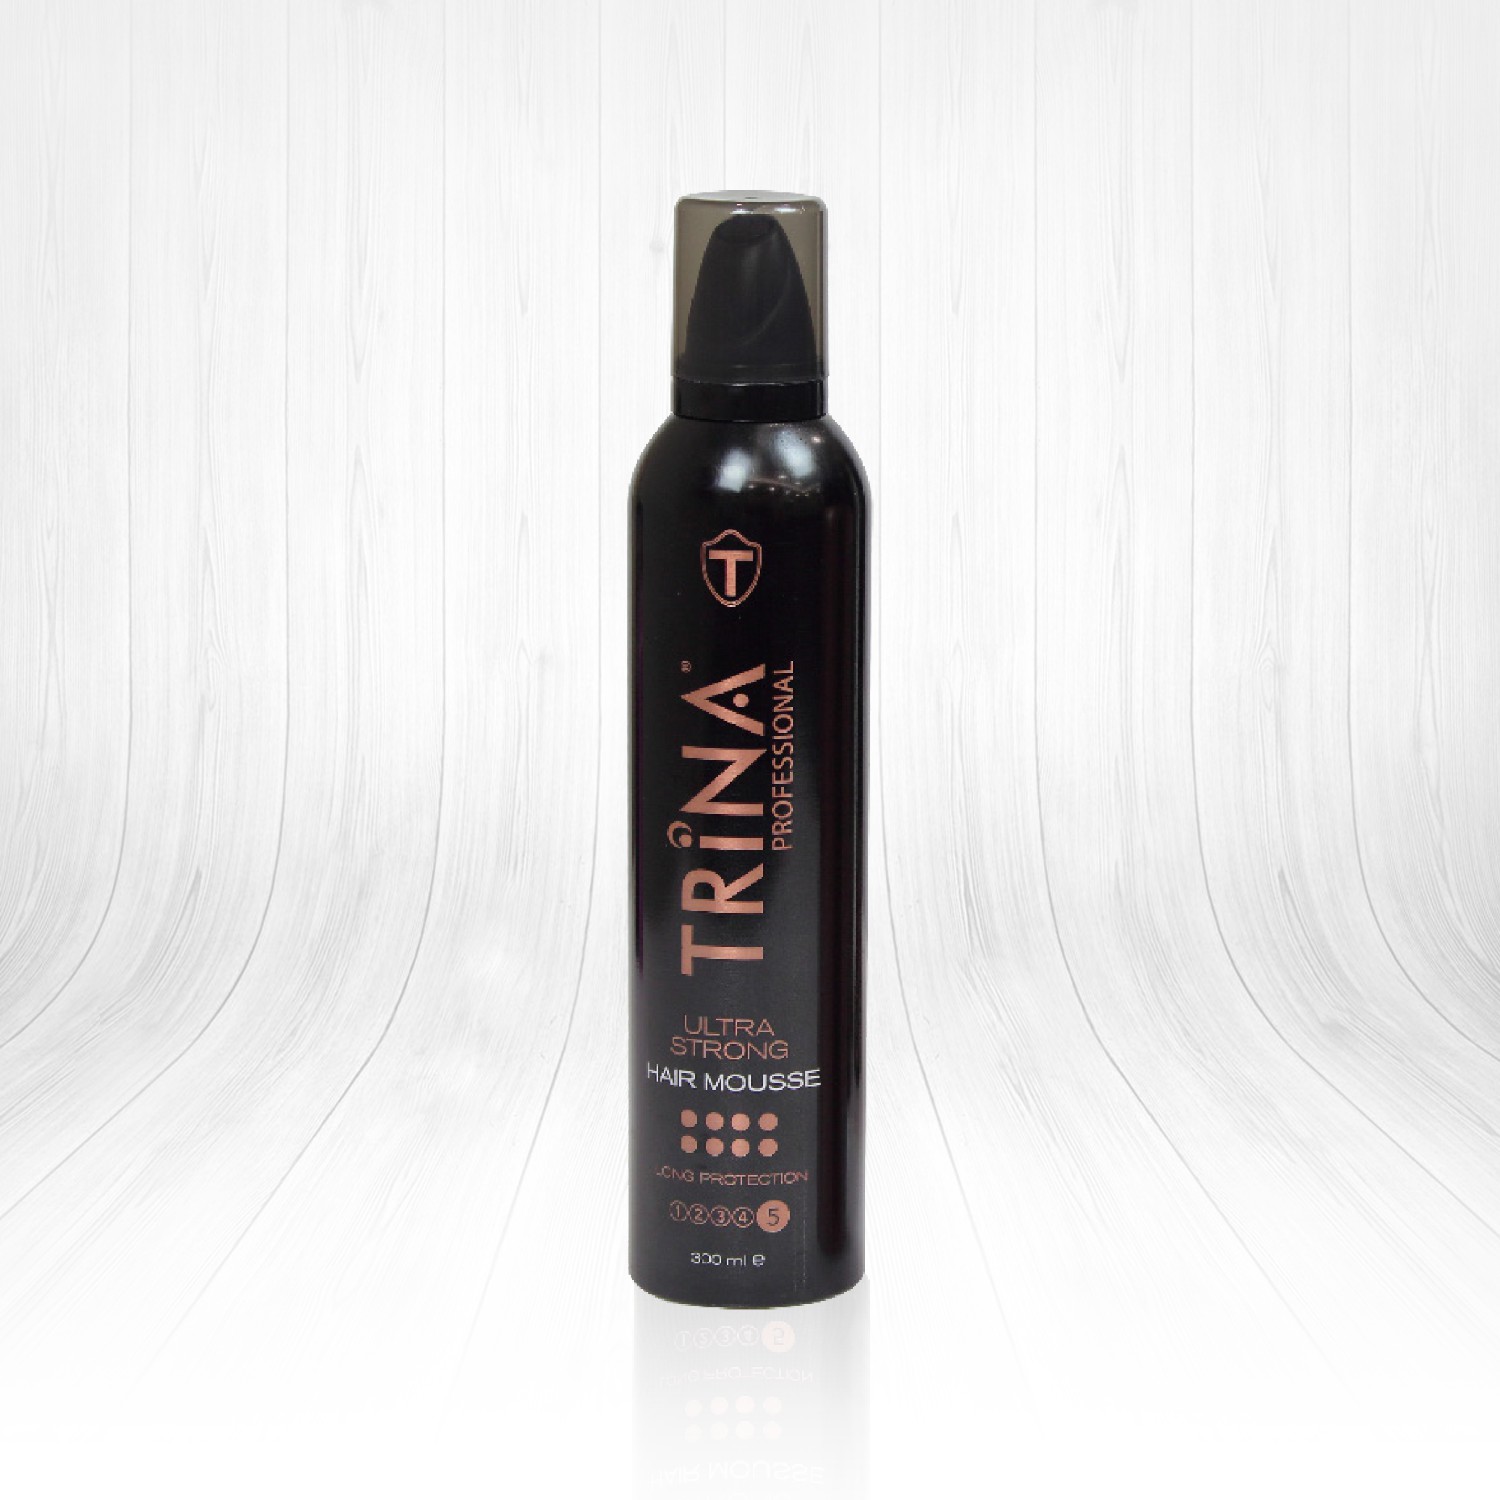 Trina Ultra Strong Hair Mousse Ekstra Güçlü Saç Köpüğü